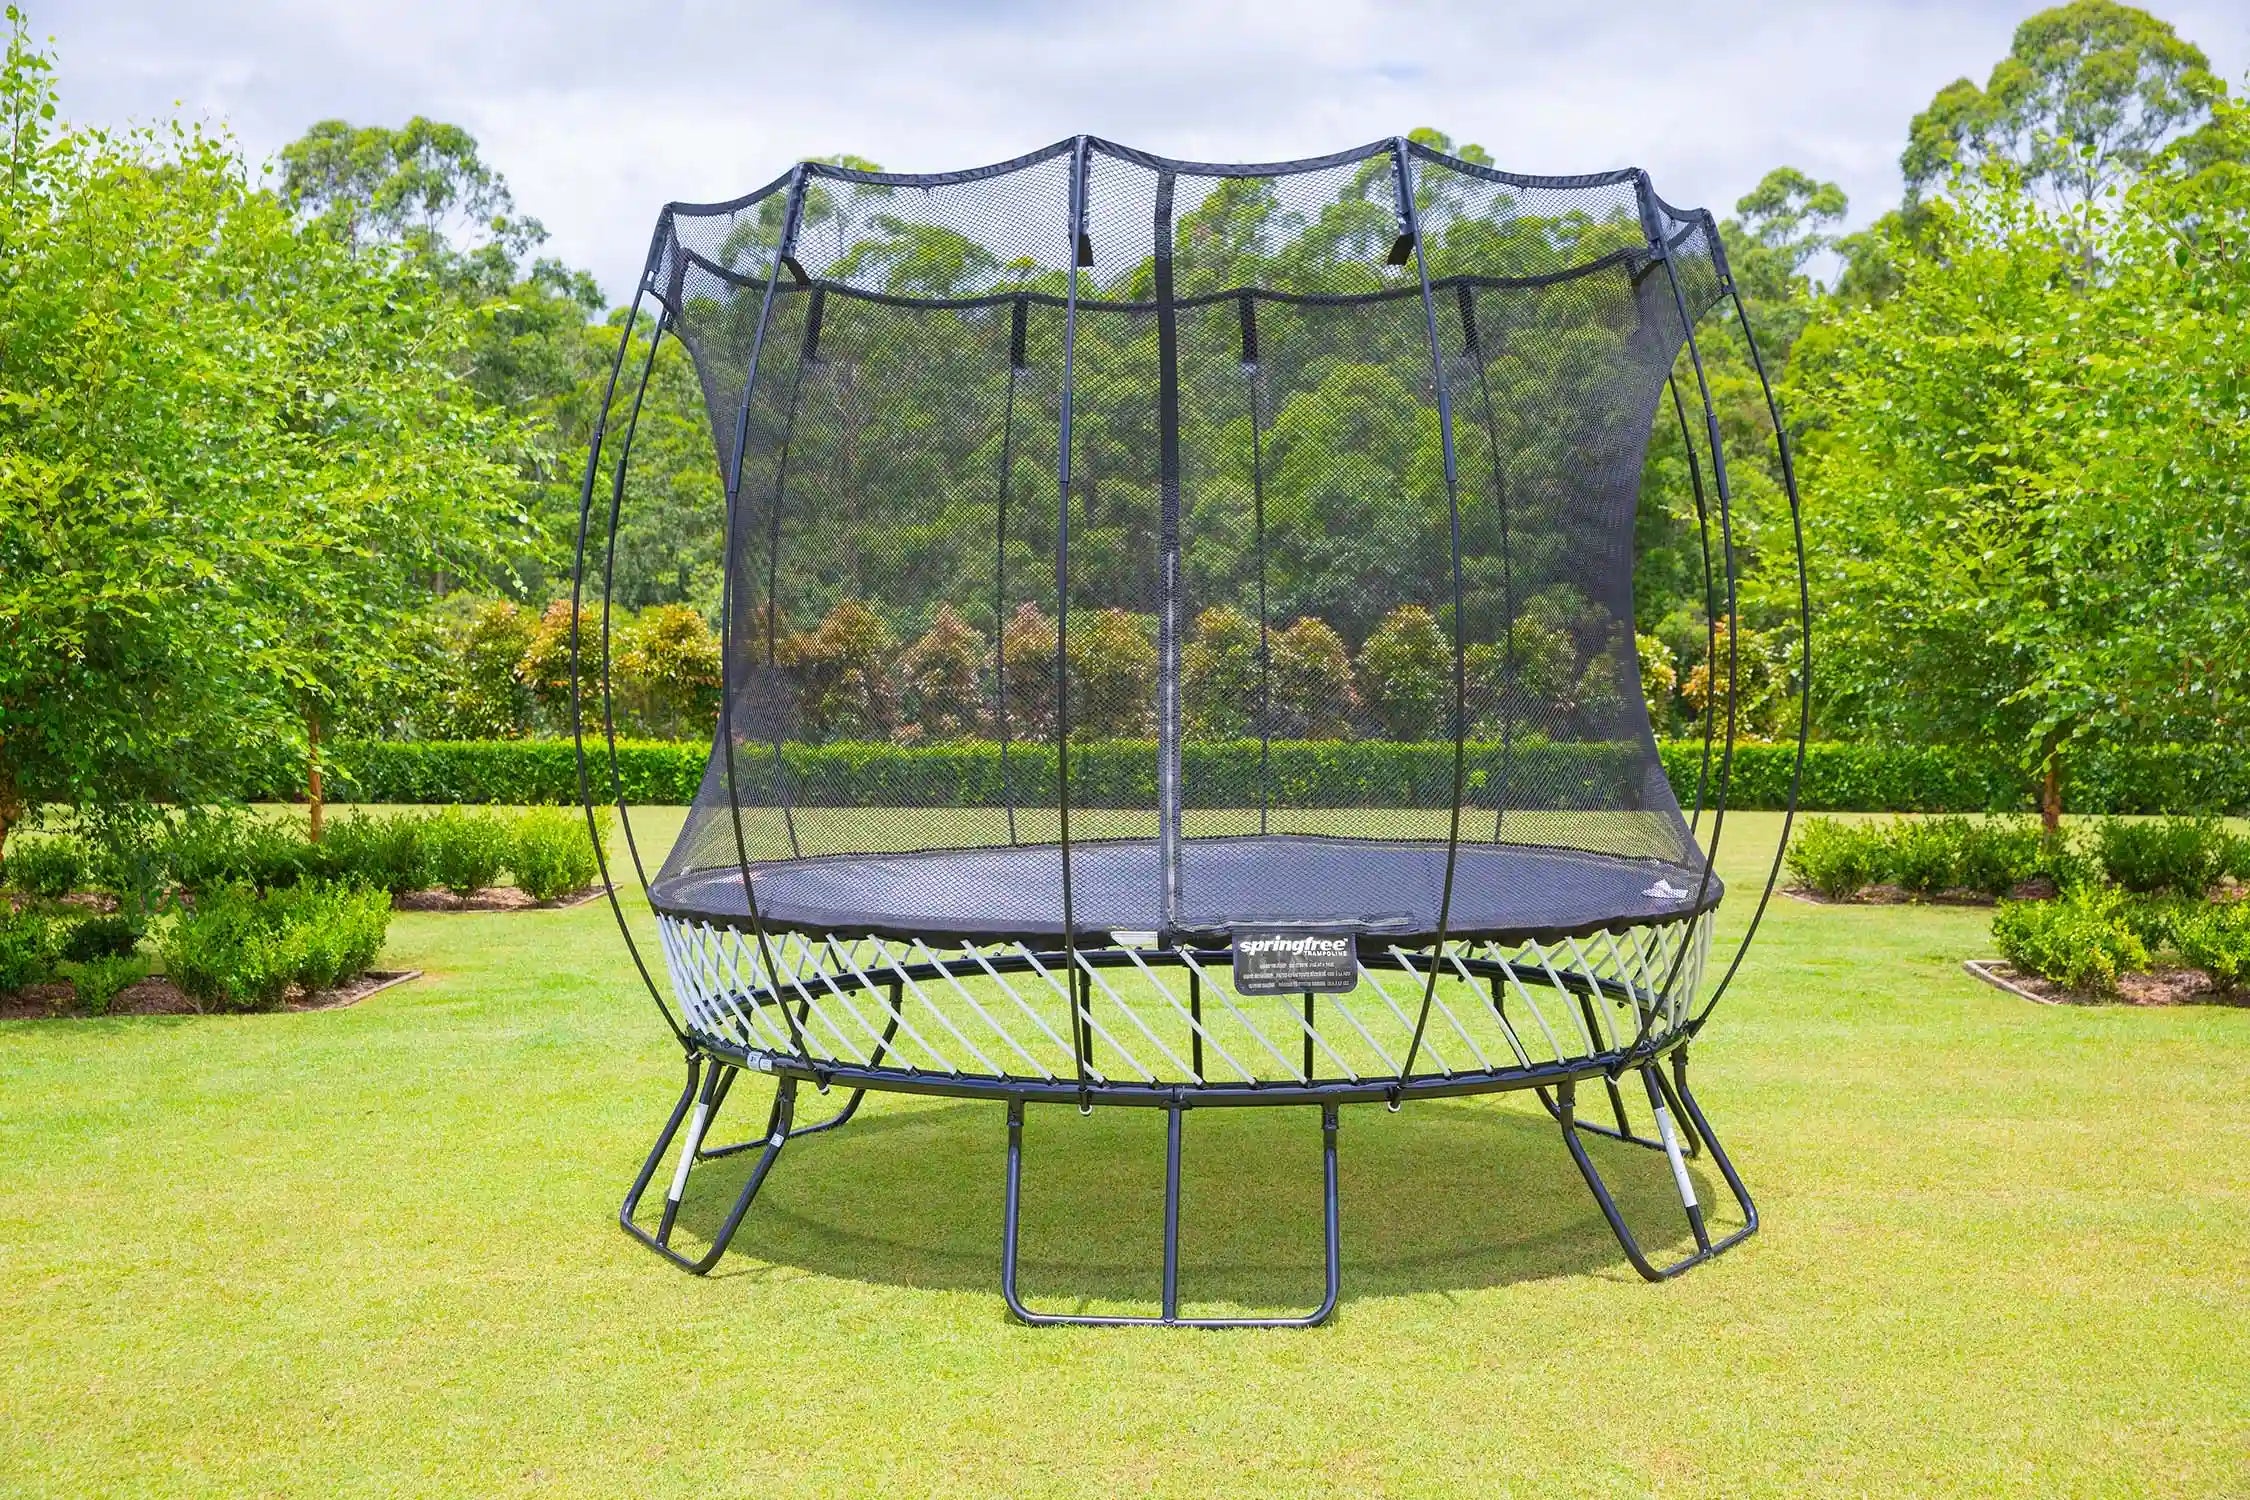 An outdoor trampoline